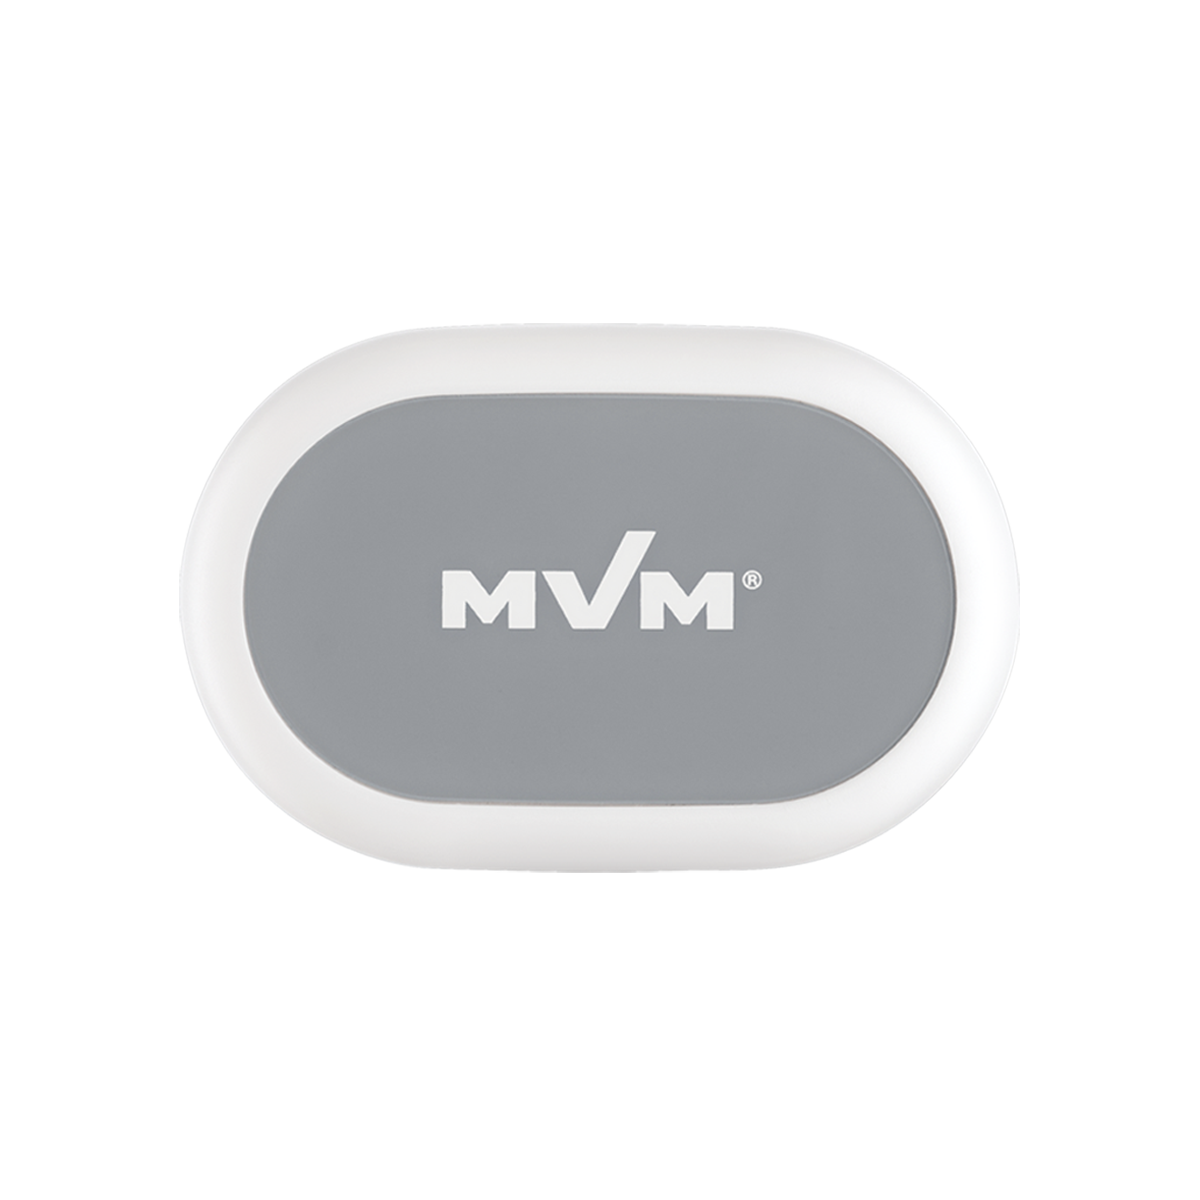 Держатель для швабры MVM округлый пластиковый серый BP-19 white/gray